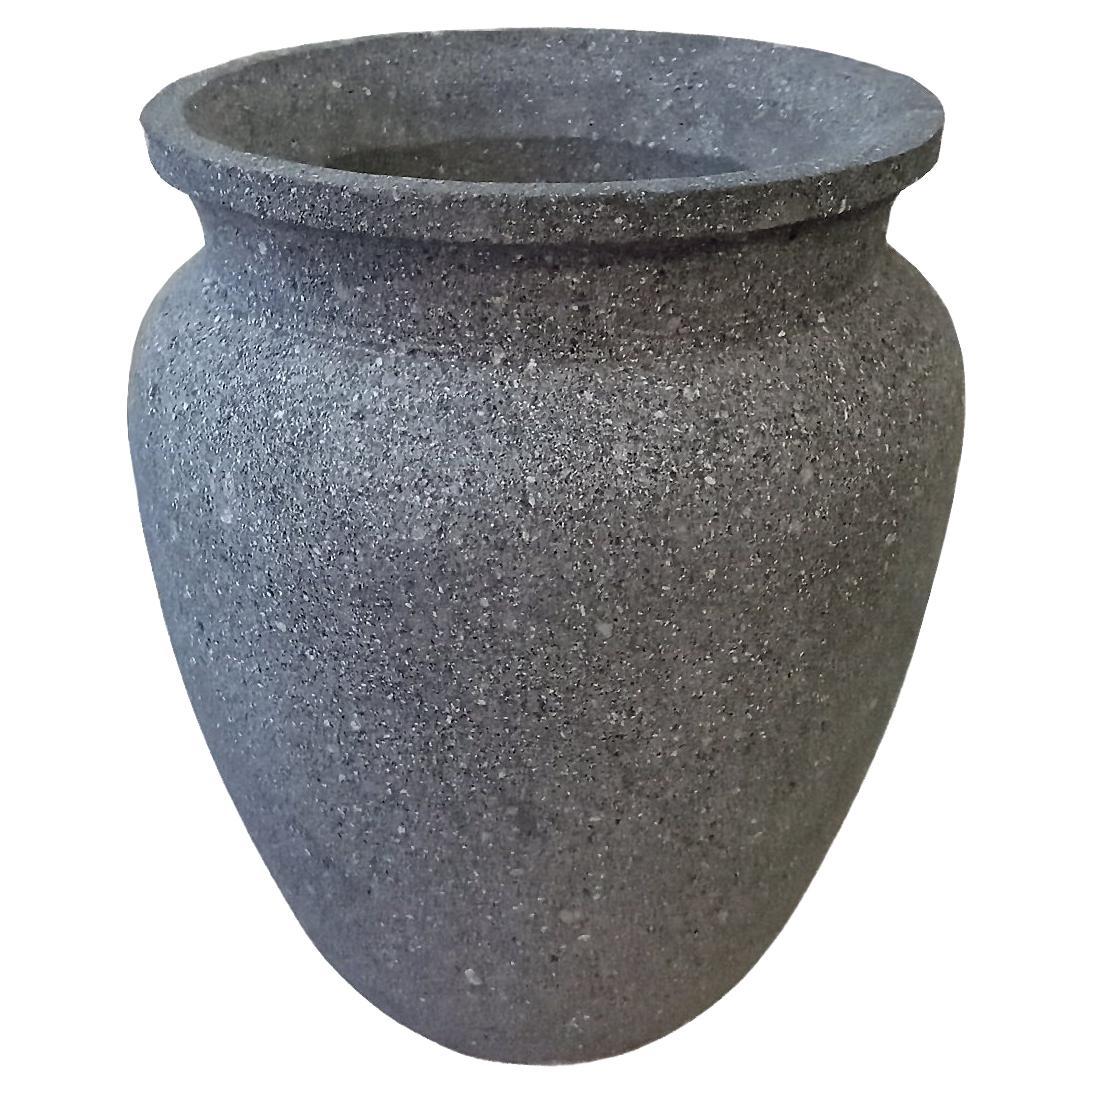 Lava Rock Jar / Vase from Mexico